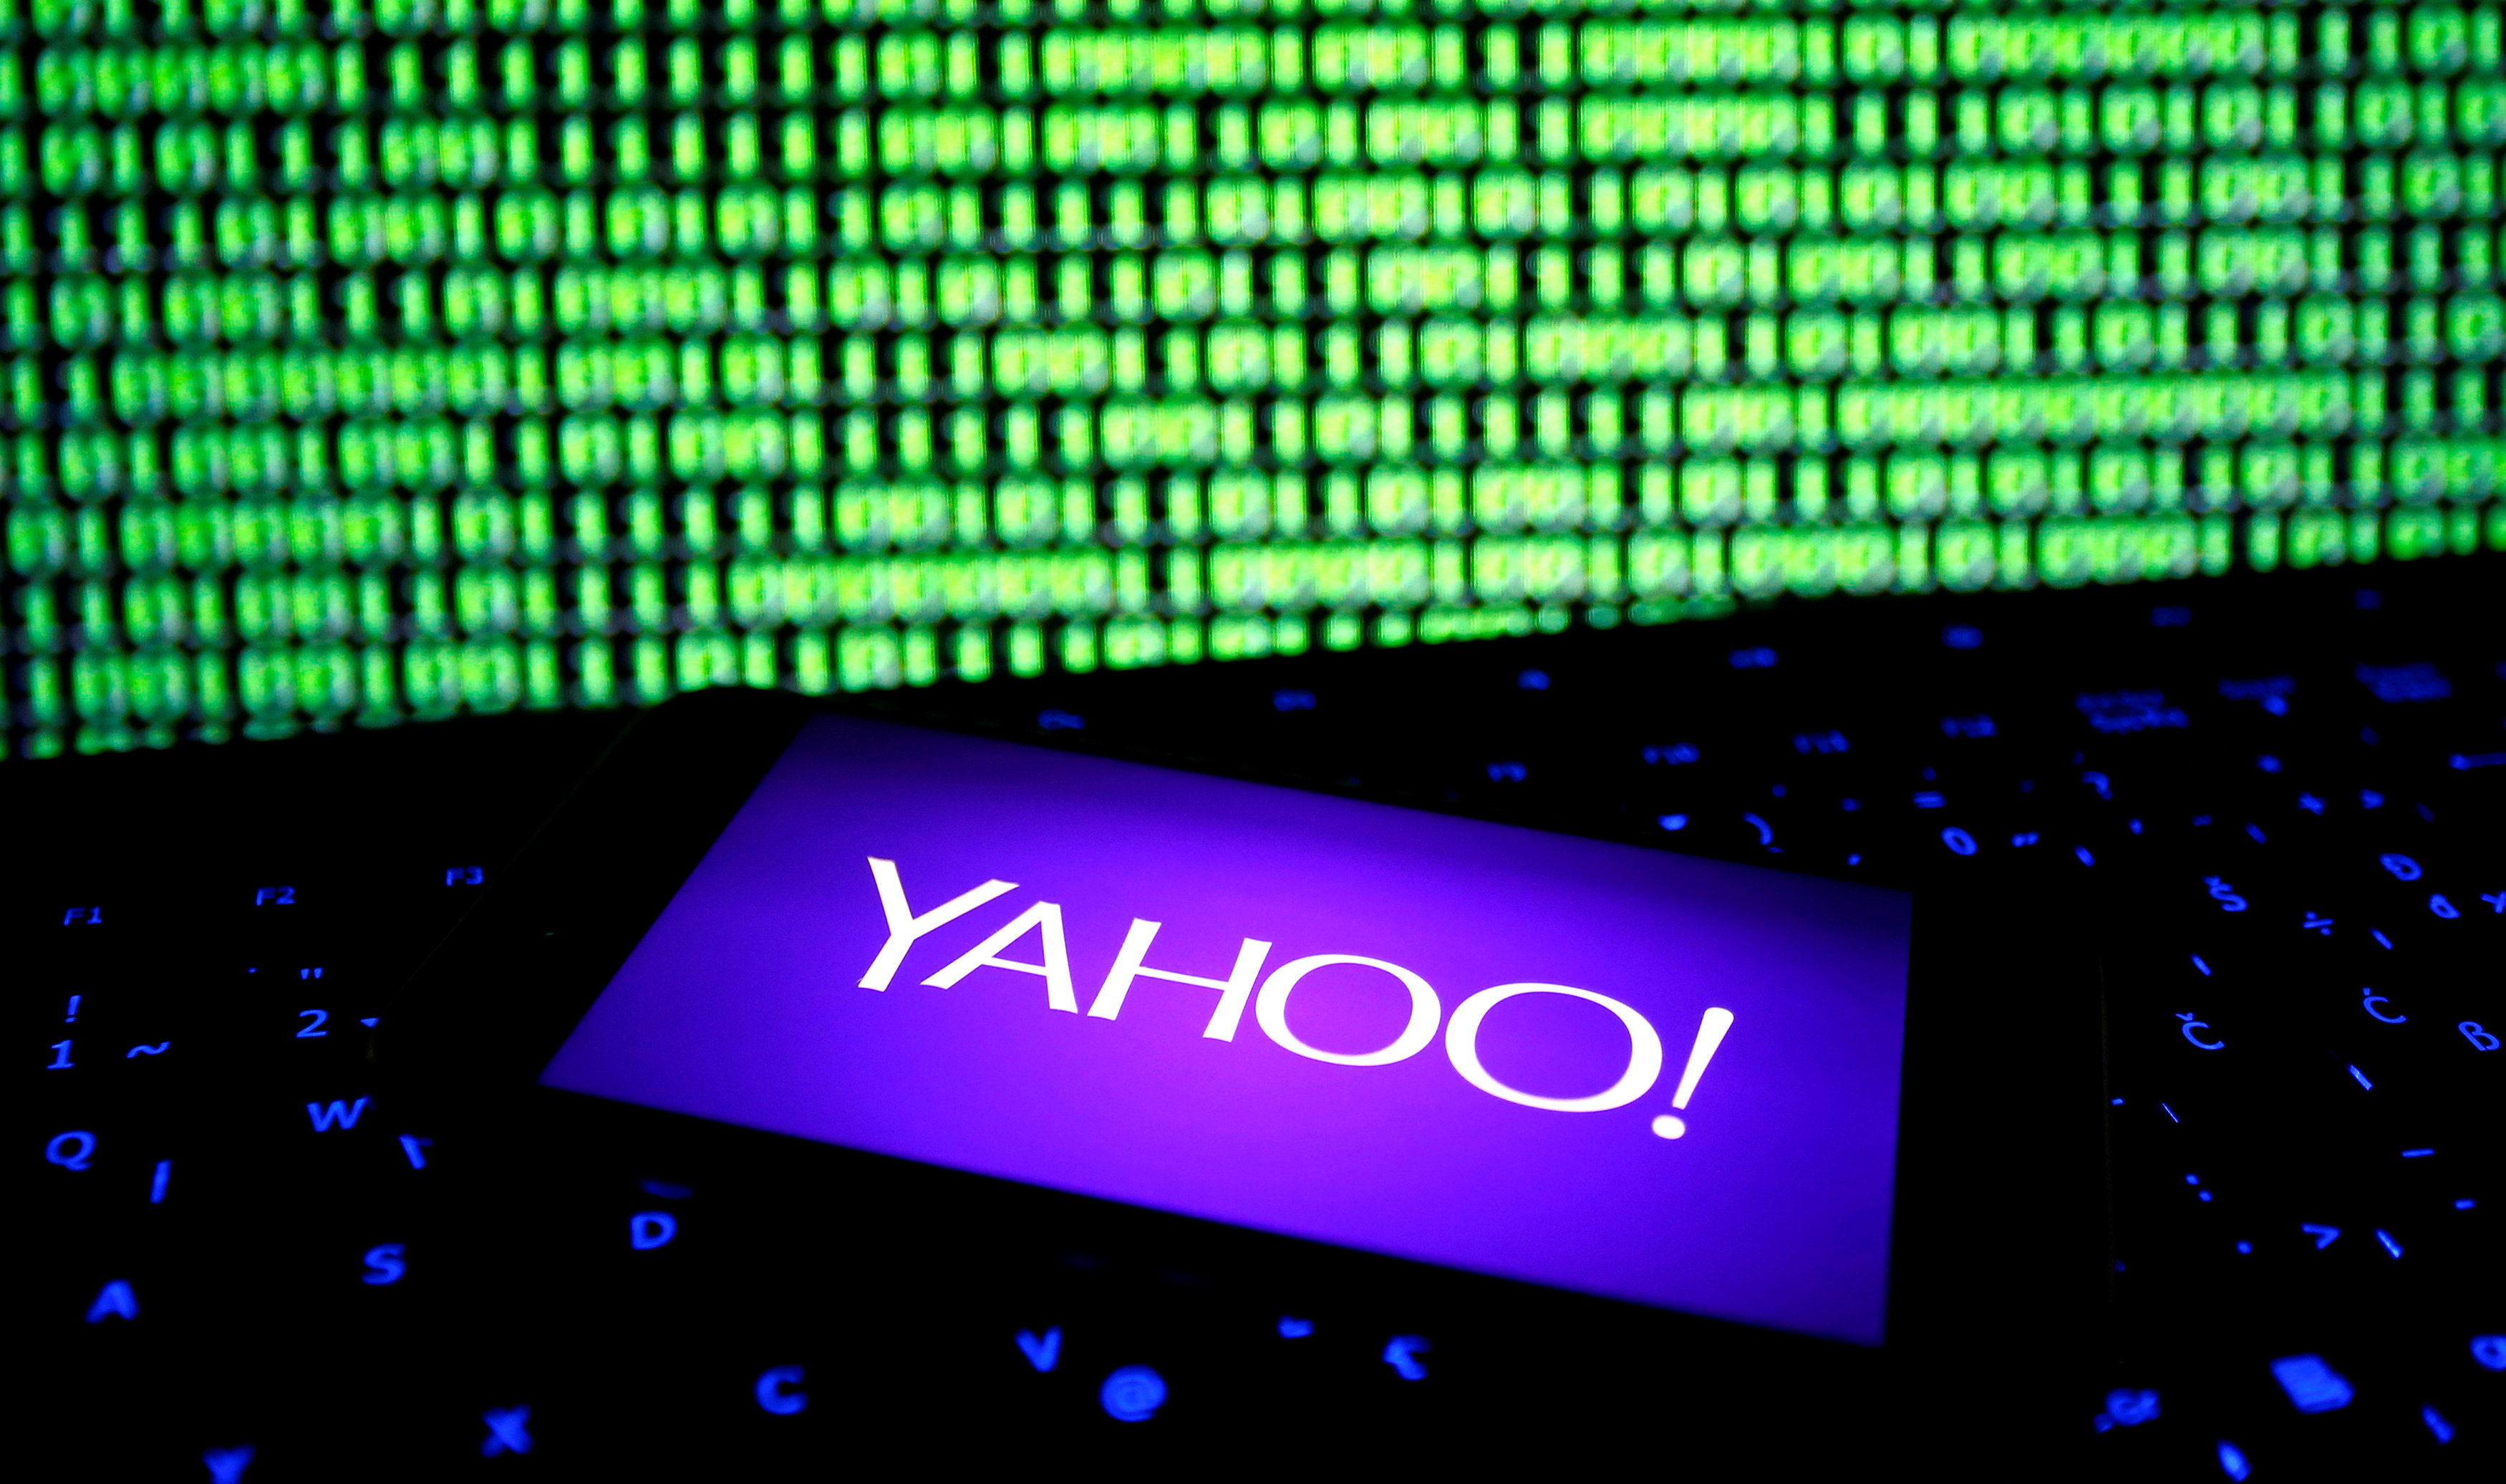 All 3 billion accounts hacked in 2013 data theft, Yahoo says